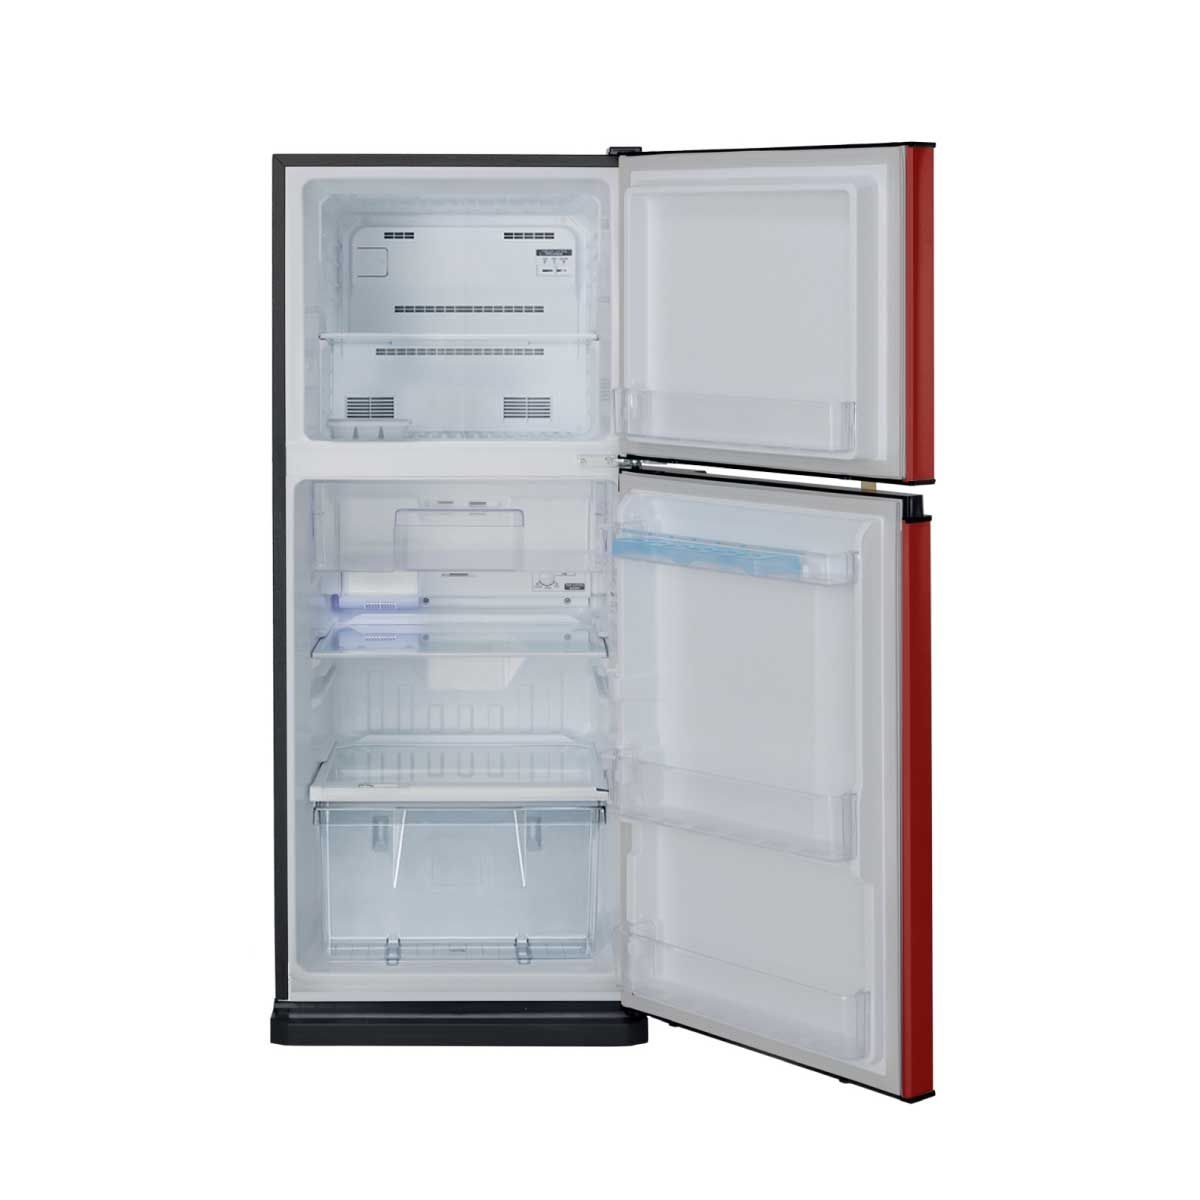 MITSUBISHI ELECTRIC ตู้เย็น2ประตู 7.3คิว สีแดง ไดมอนด์ รุ่นMR-FV22T